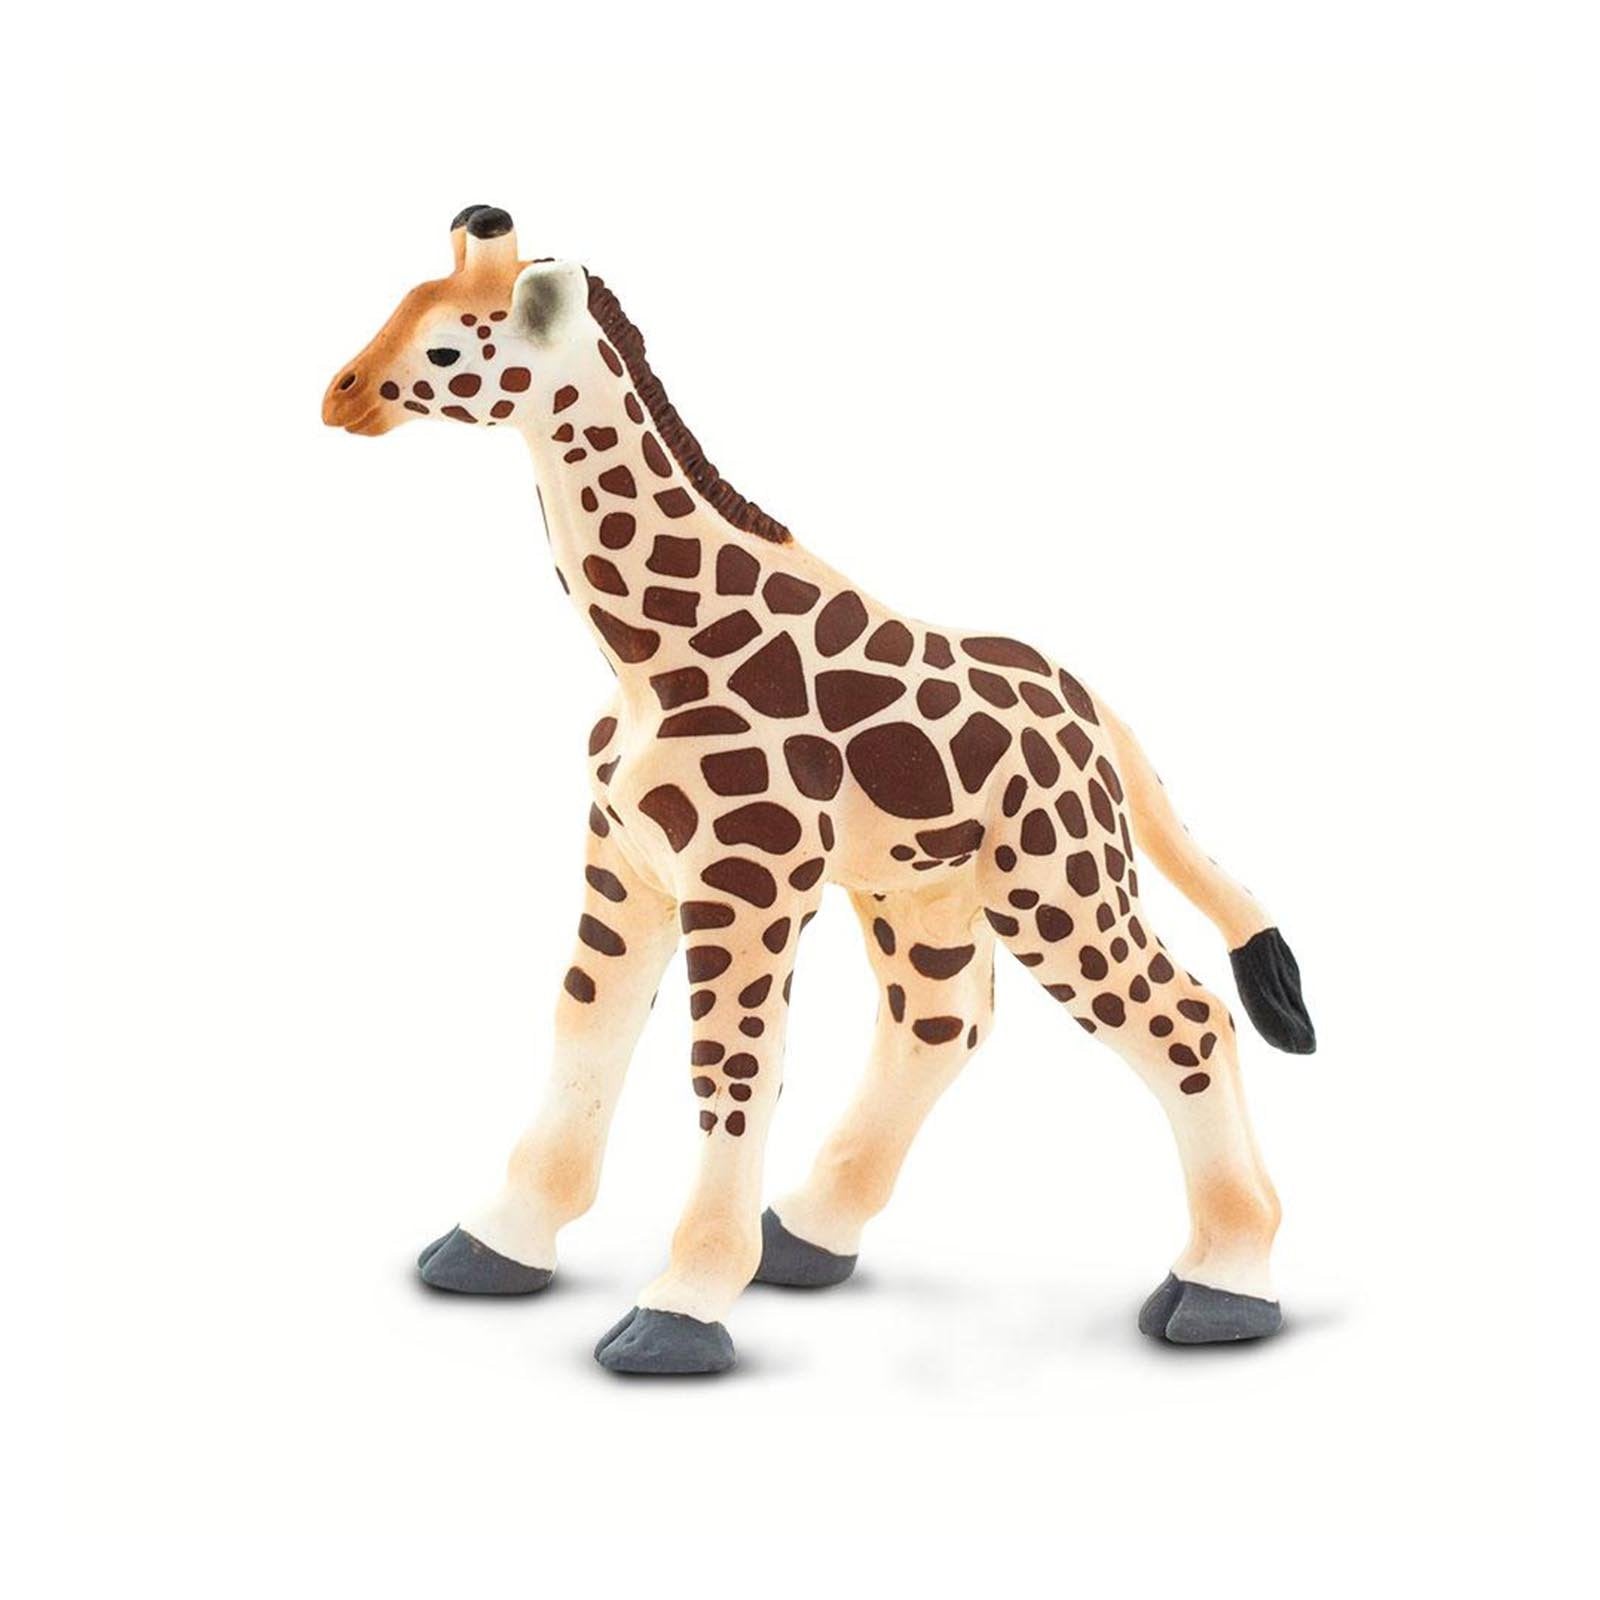 giraffe figure